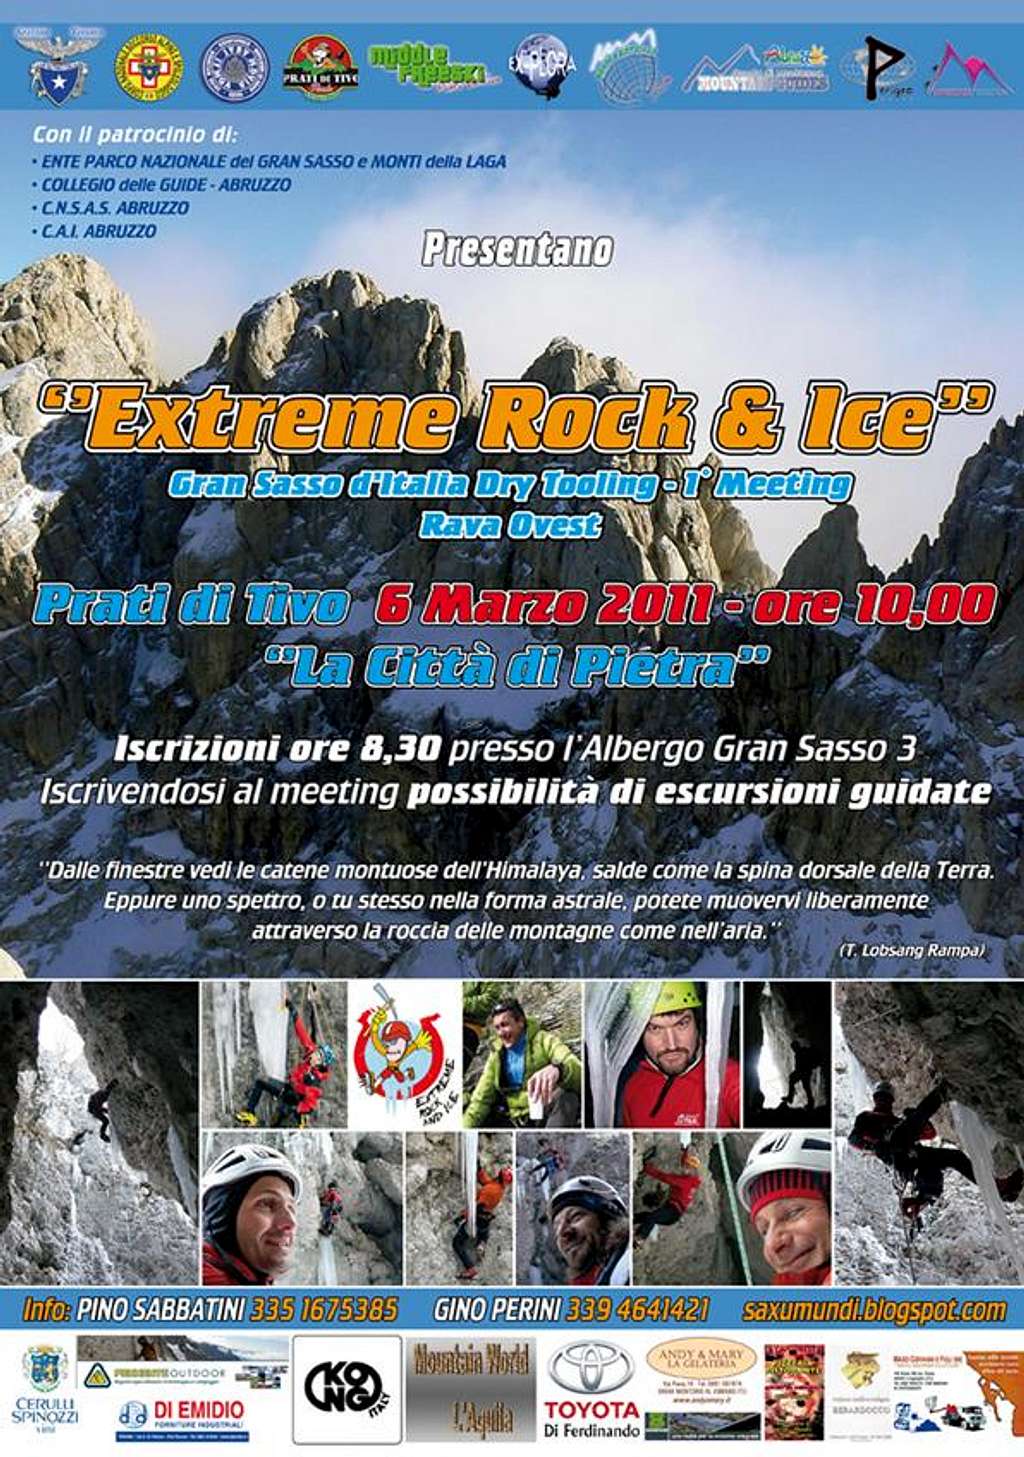 Extreme Rock&Ice Dry Tooling Prati di Tivo - Gran Sasso d'Italia  Abruzzo